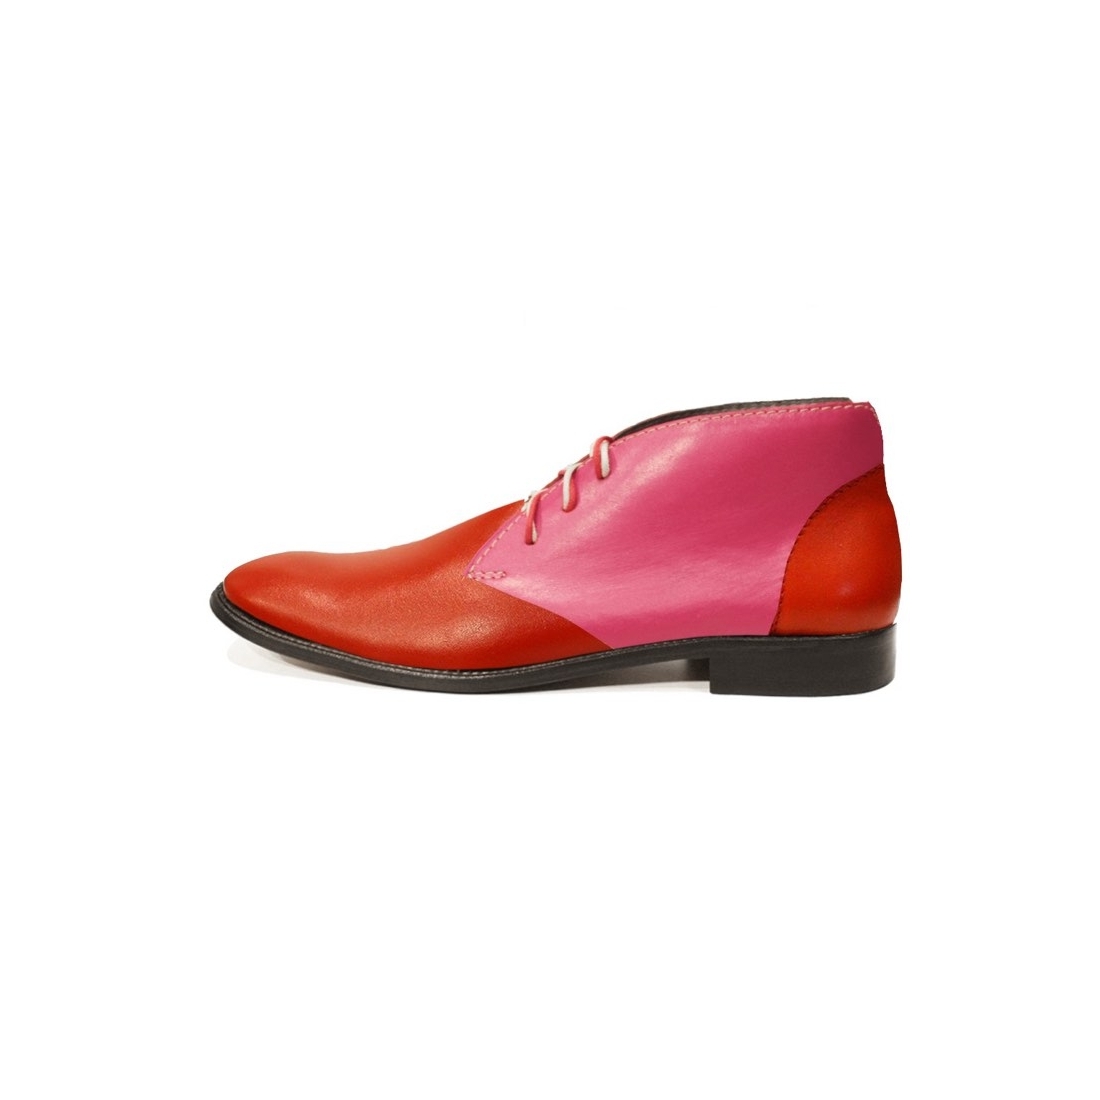 Modello Scaporro - Desert Boots - Handmade Colorful Italian Leather Shoes